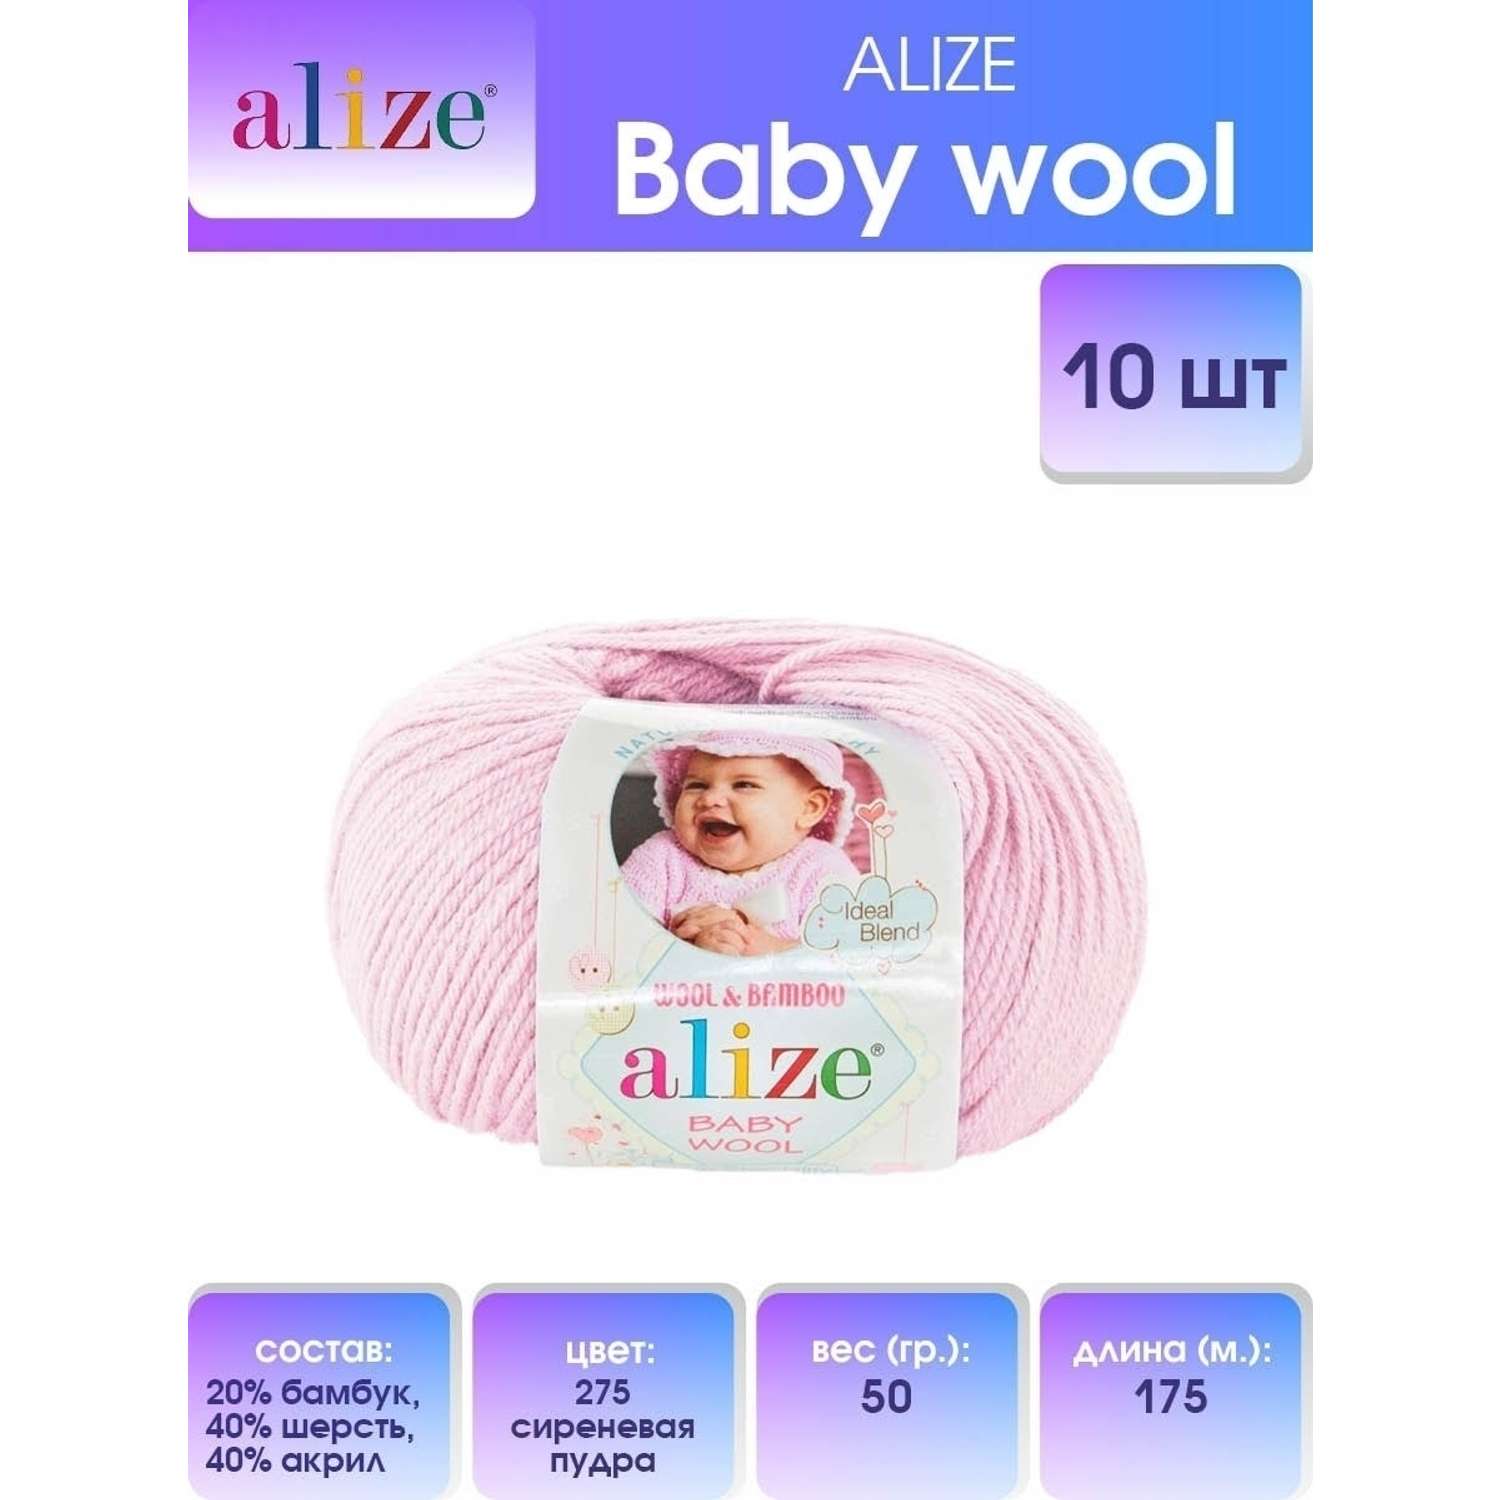 Пряжа для вязания Alize baby wool бамбук шерсть акрил мягкая 50 гр 175 м 275 сиреневая пудра 10 мотков - фото 1